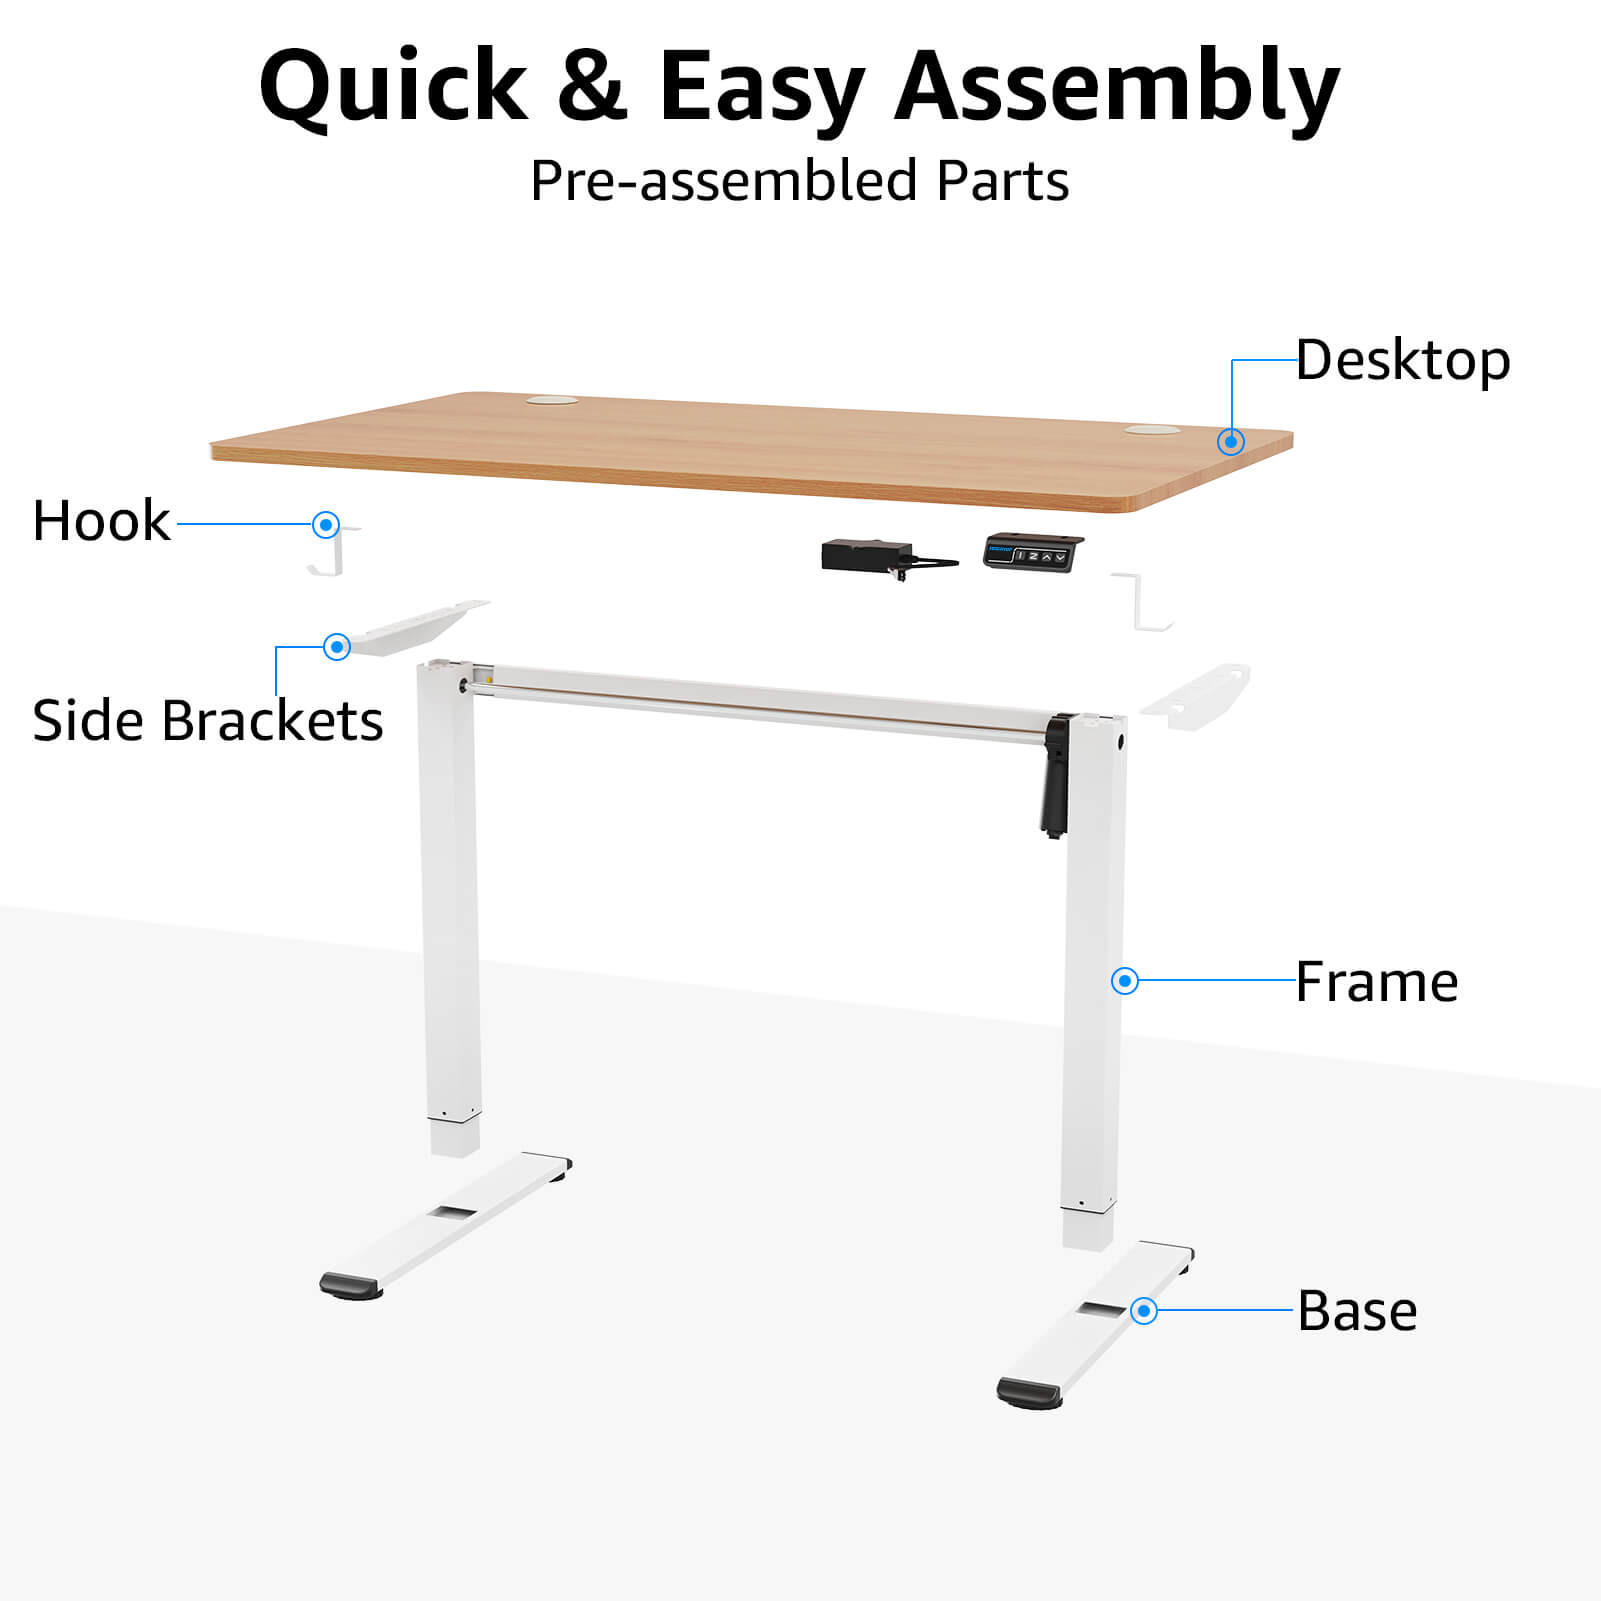 Height Adjustable Electric Standing Desk - Oak MUD201